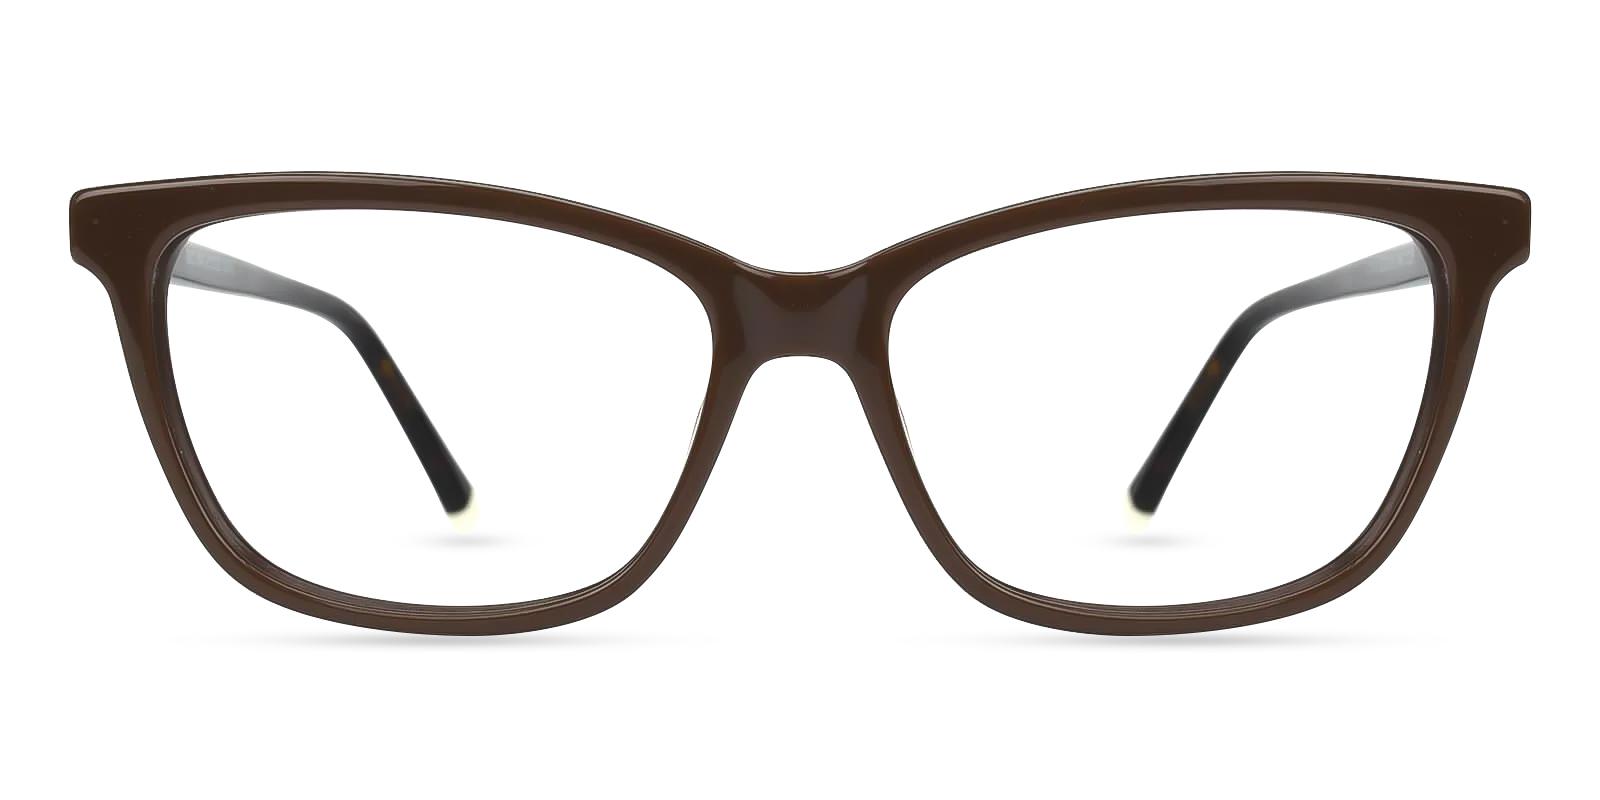 Zion Brown Acetate Eyeglasses , SpringHinges , UniversalBridgeFit Frames from ABBE Glasses